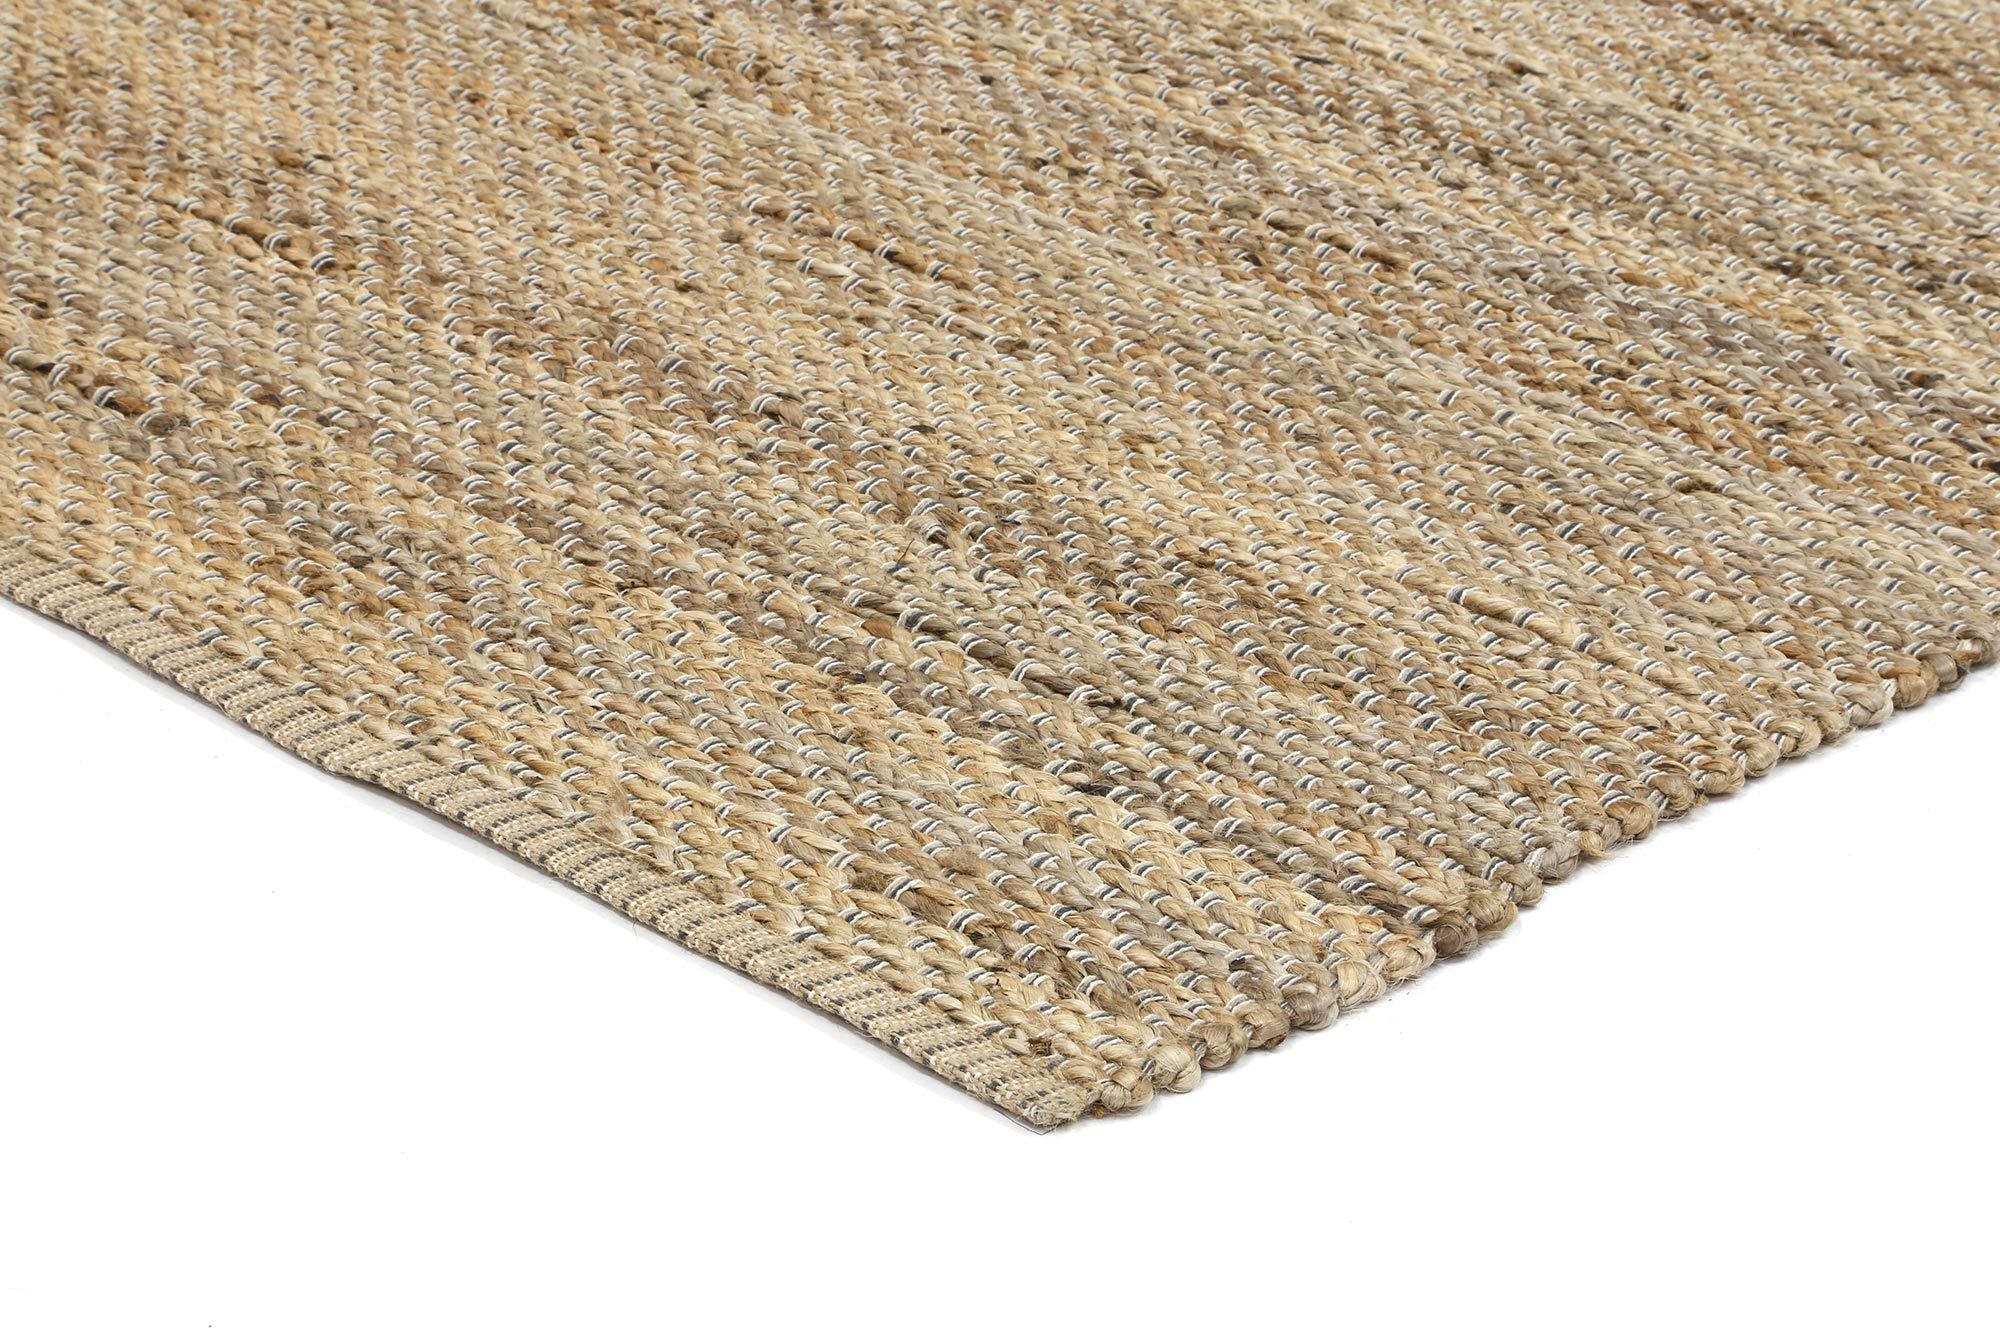 Taj Grey Natural Basket Weave Jute Rug - Natural - Rugs a Million